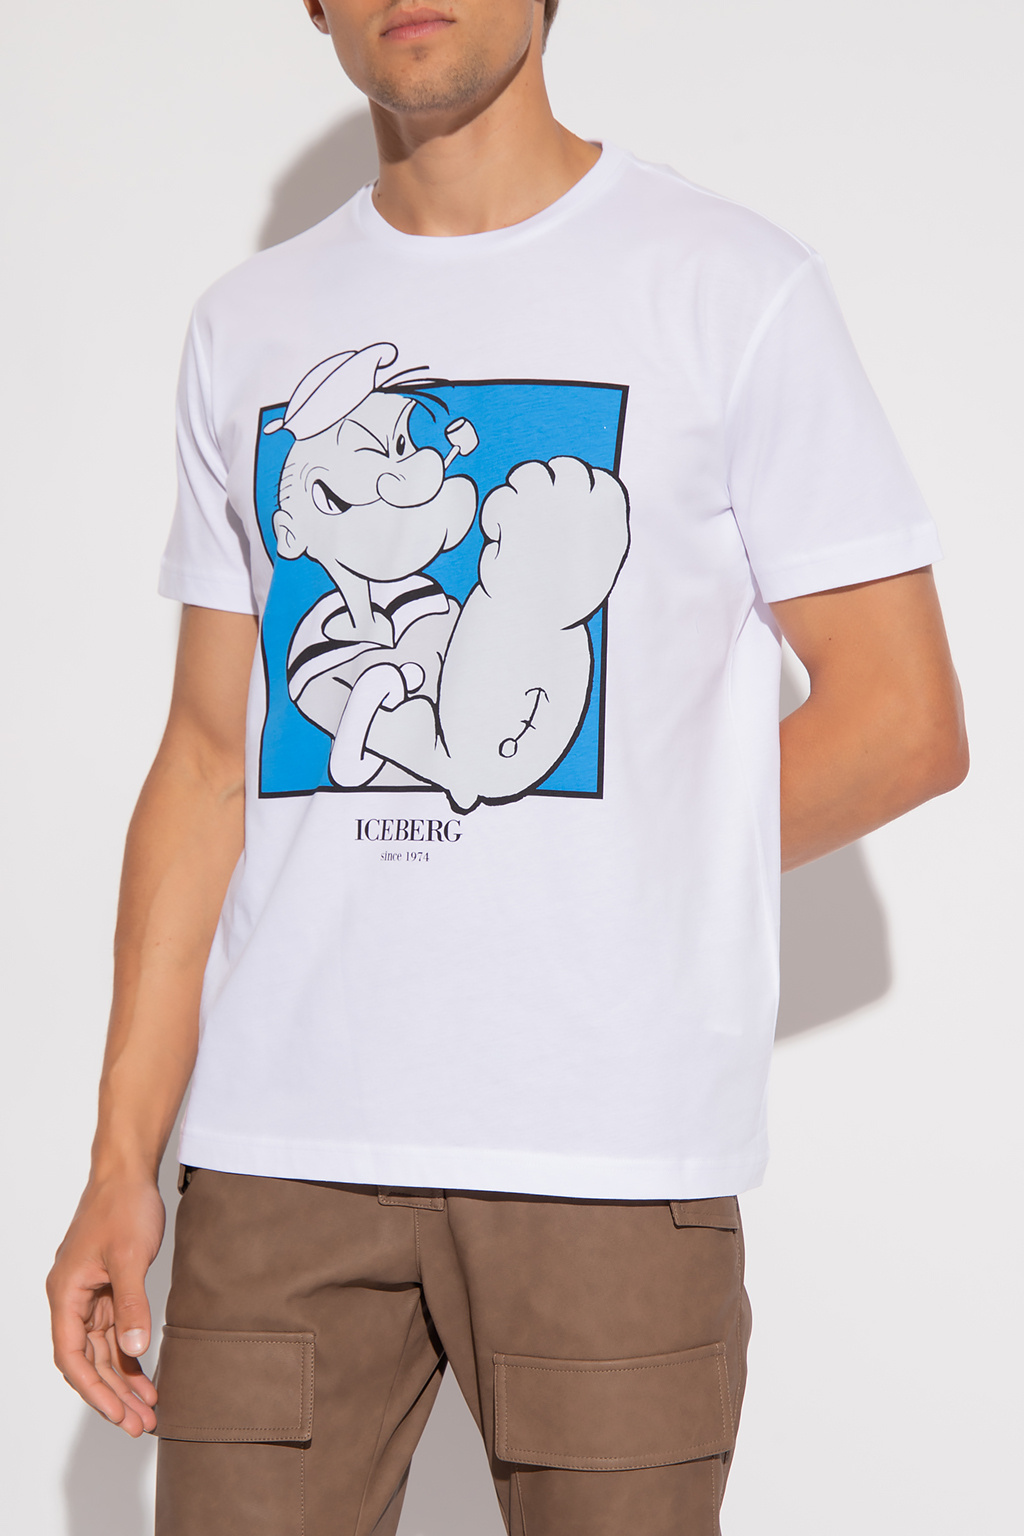 Iceberg T-shirt head with logo